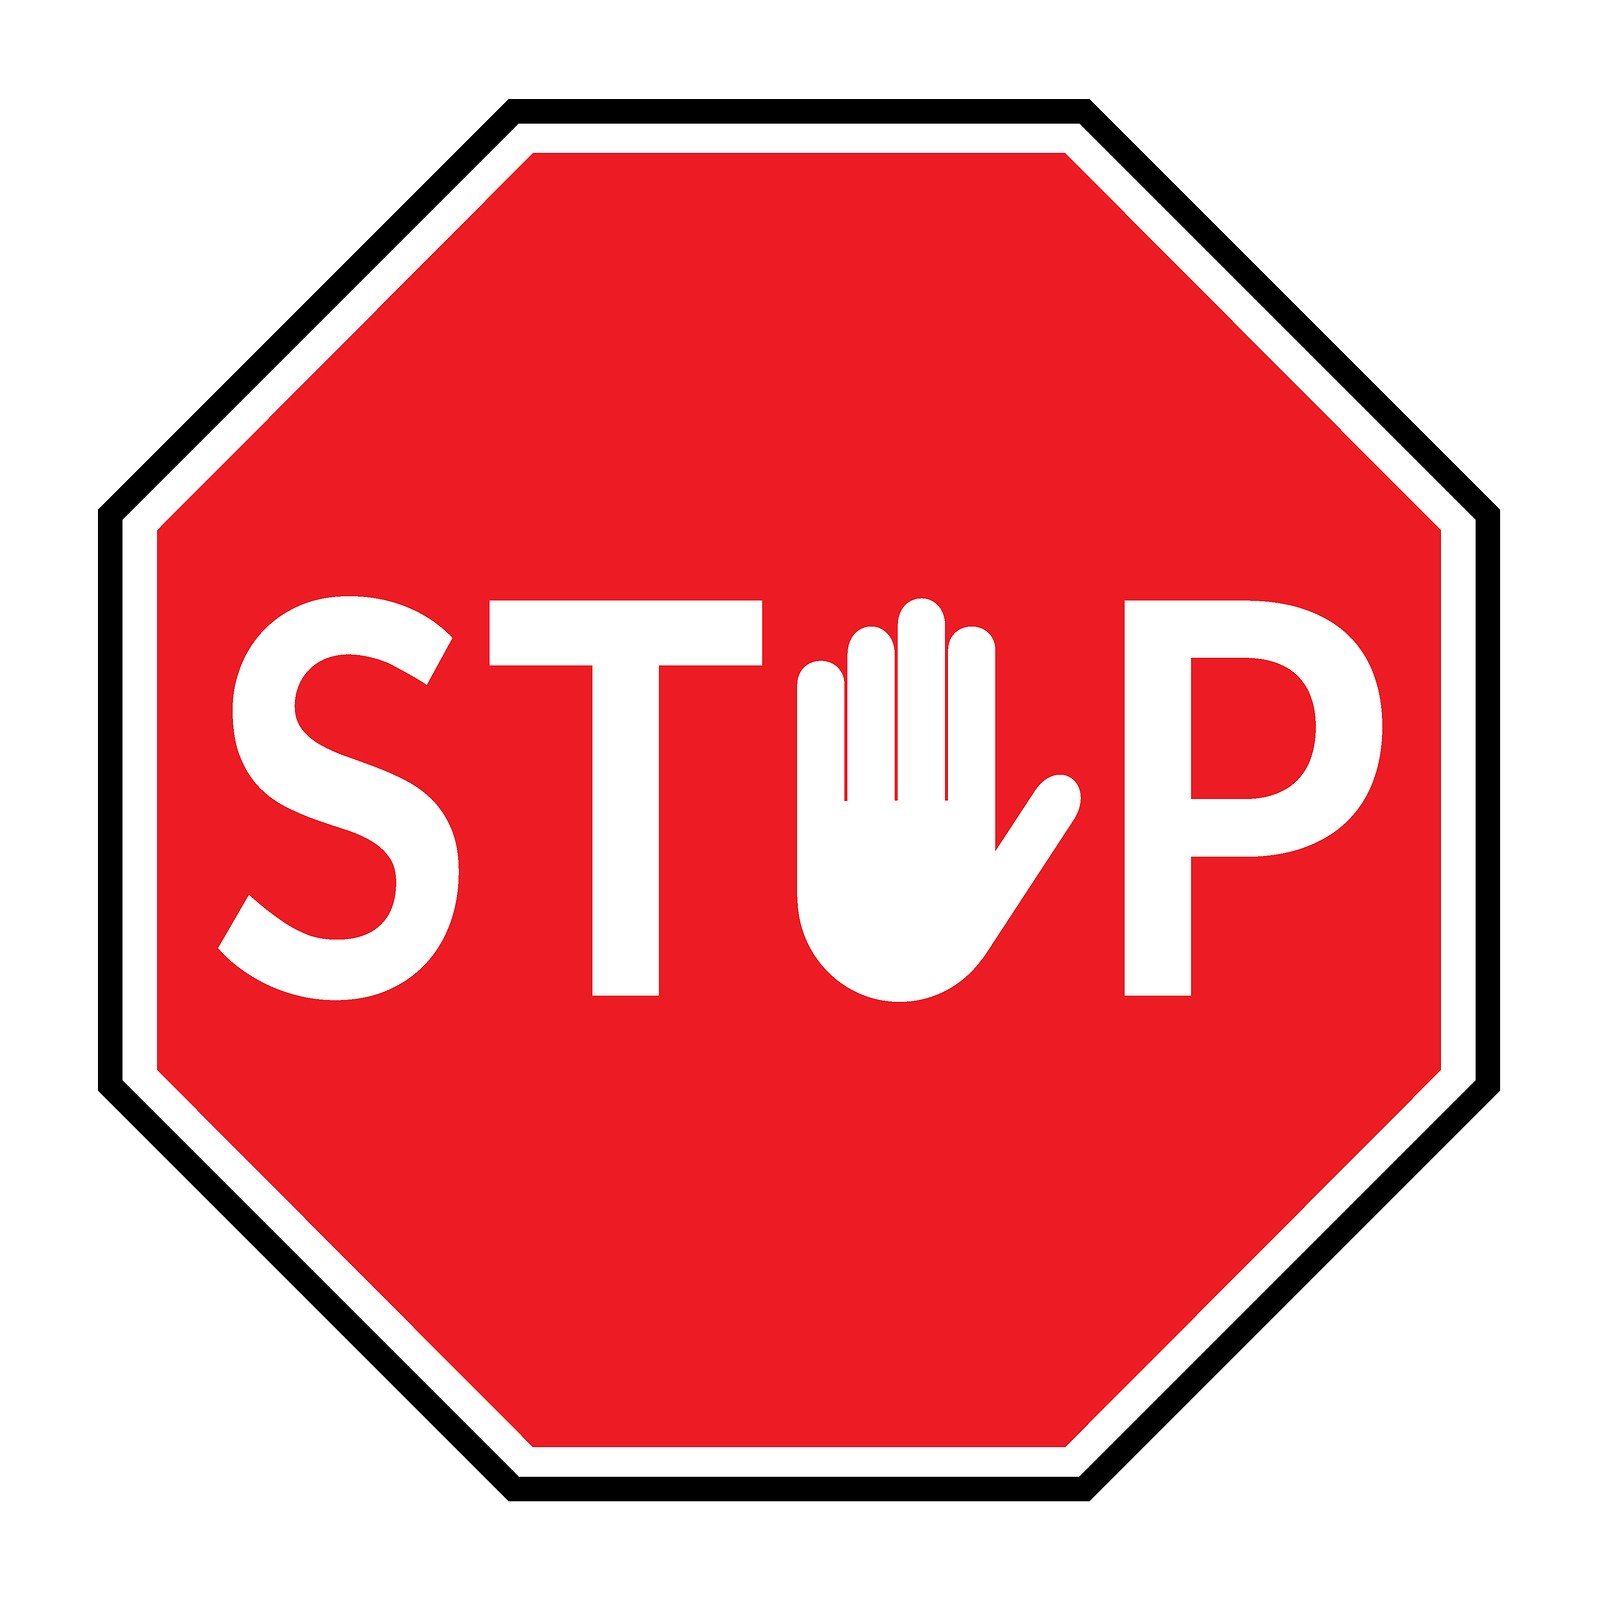 Стоп на белом фоне что означает. Значок стоп. Знак stop на белом фоне. Дорожный знак стоп. Знак стоп ладонь.